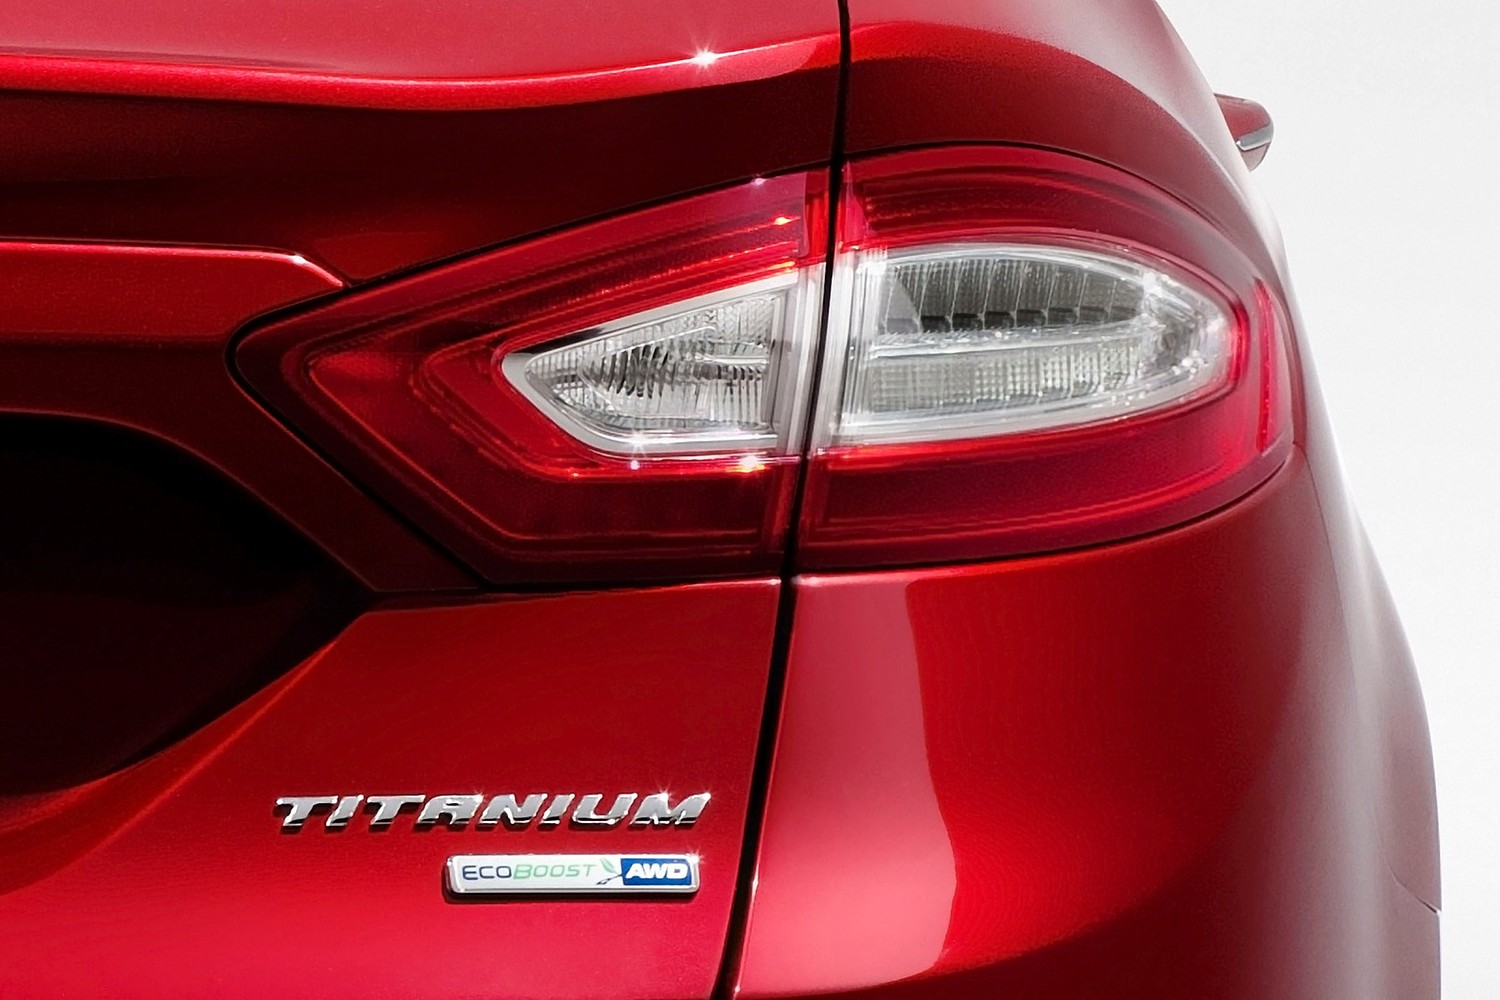 Ford Fusion Titanium Sedan Rear Badge (2014 model year shown)